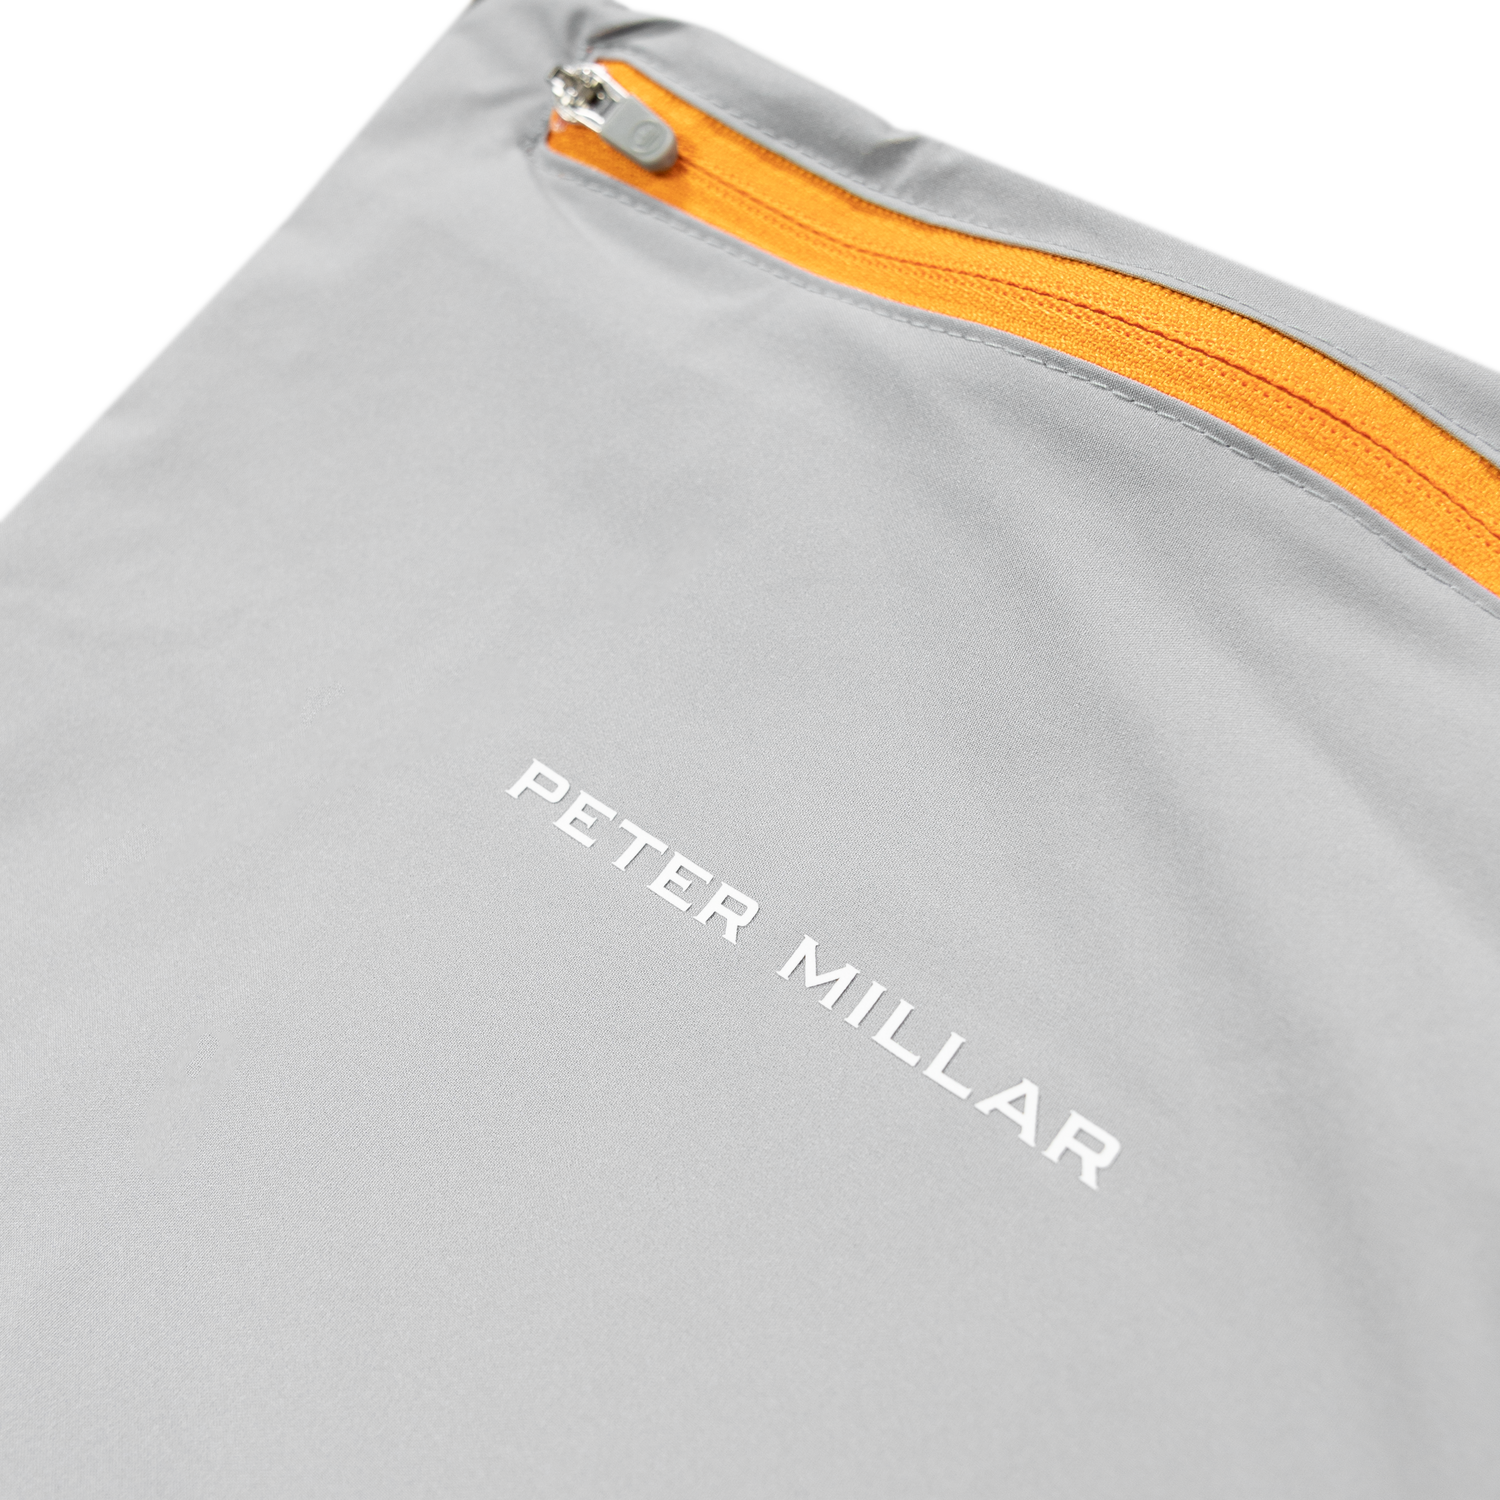 Texas A&M Peter Millar Grey Shield Half-Zip Rain Shell Jacket